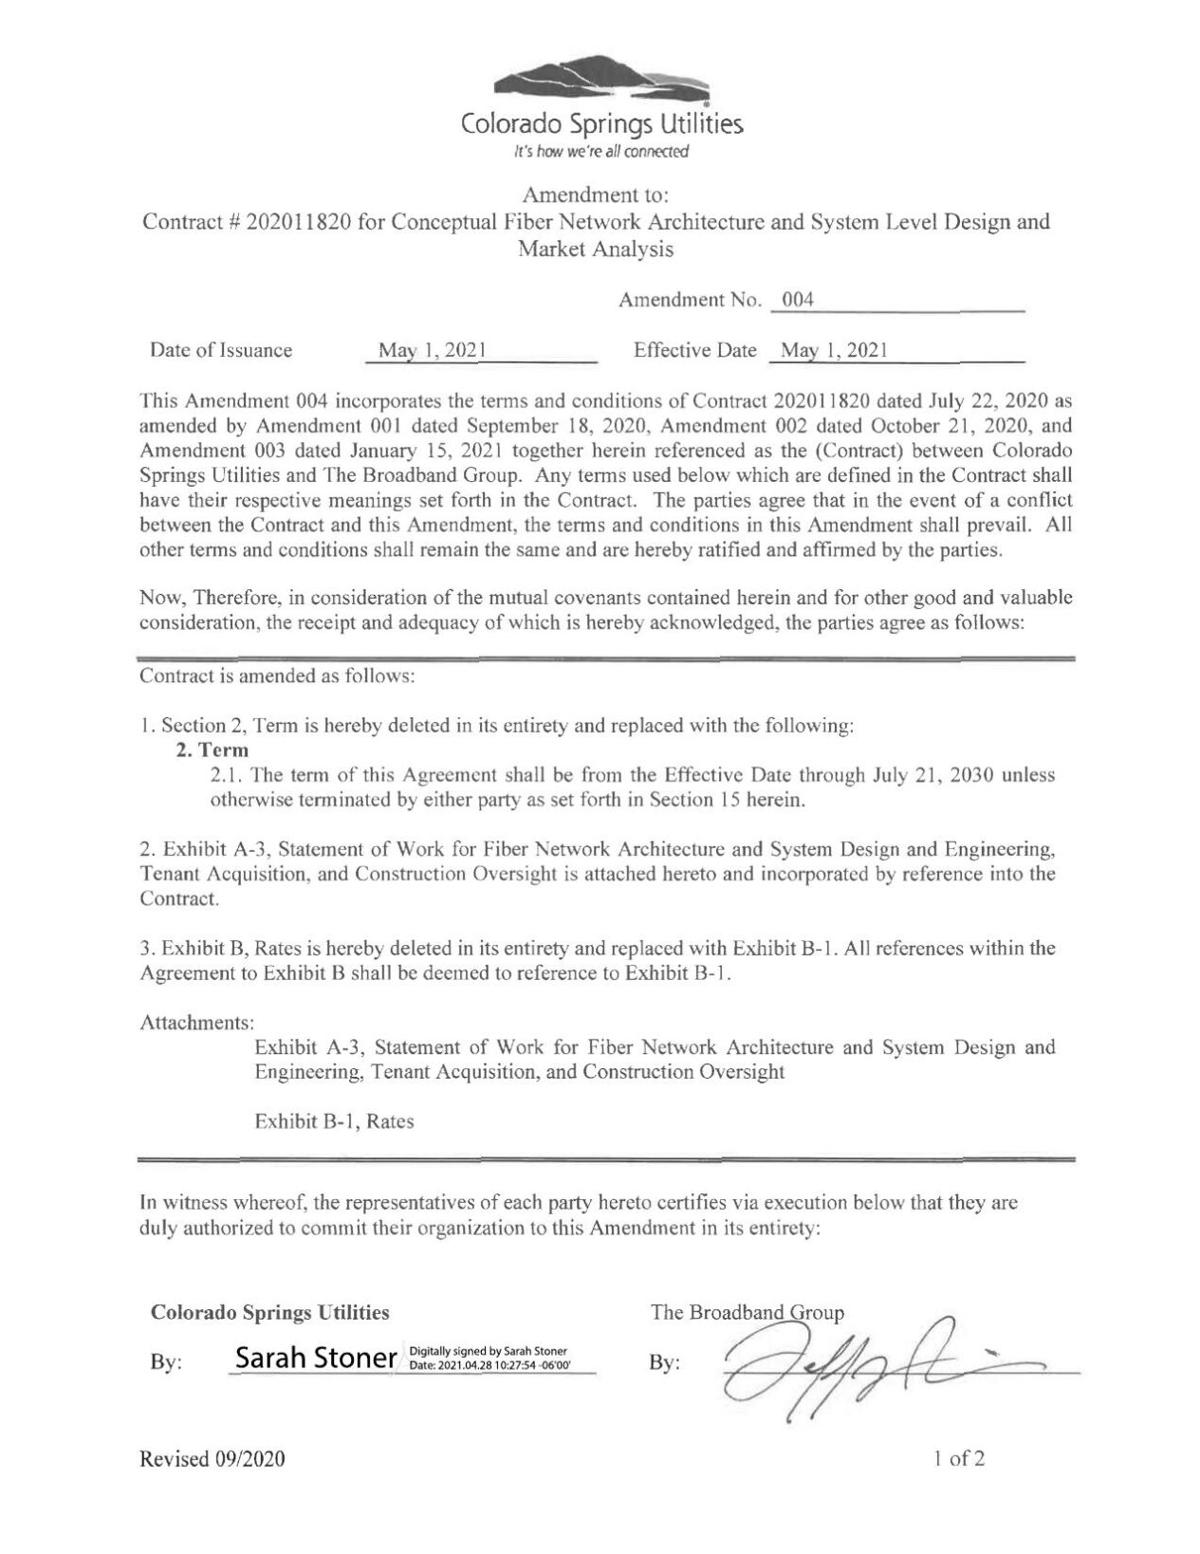 Amendment 004 Contract, CSU and TBG